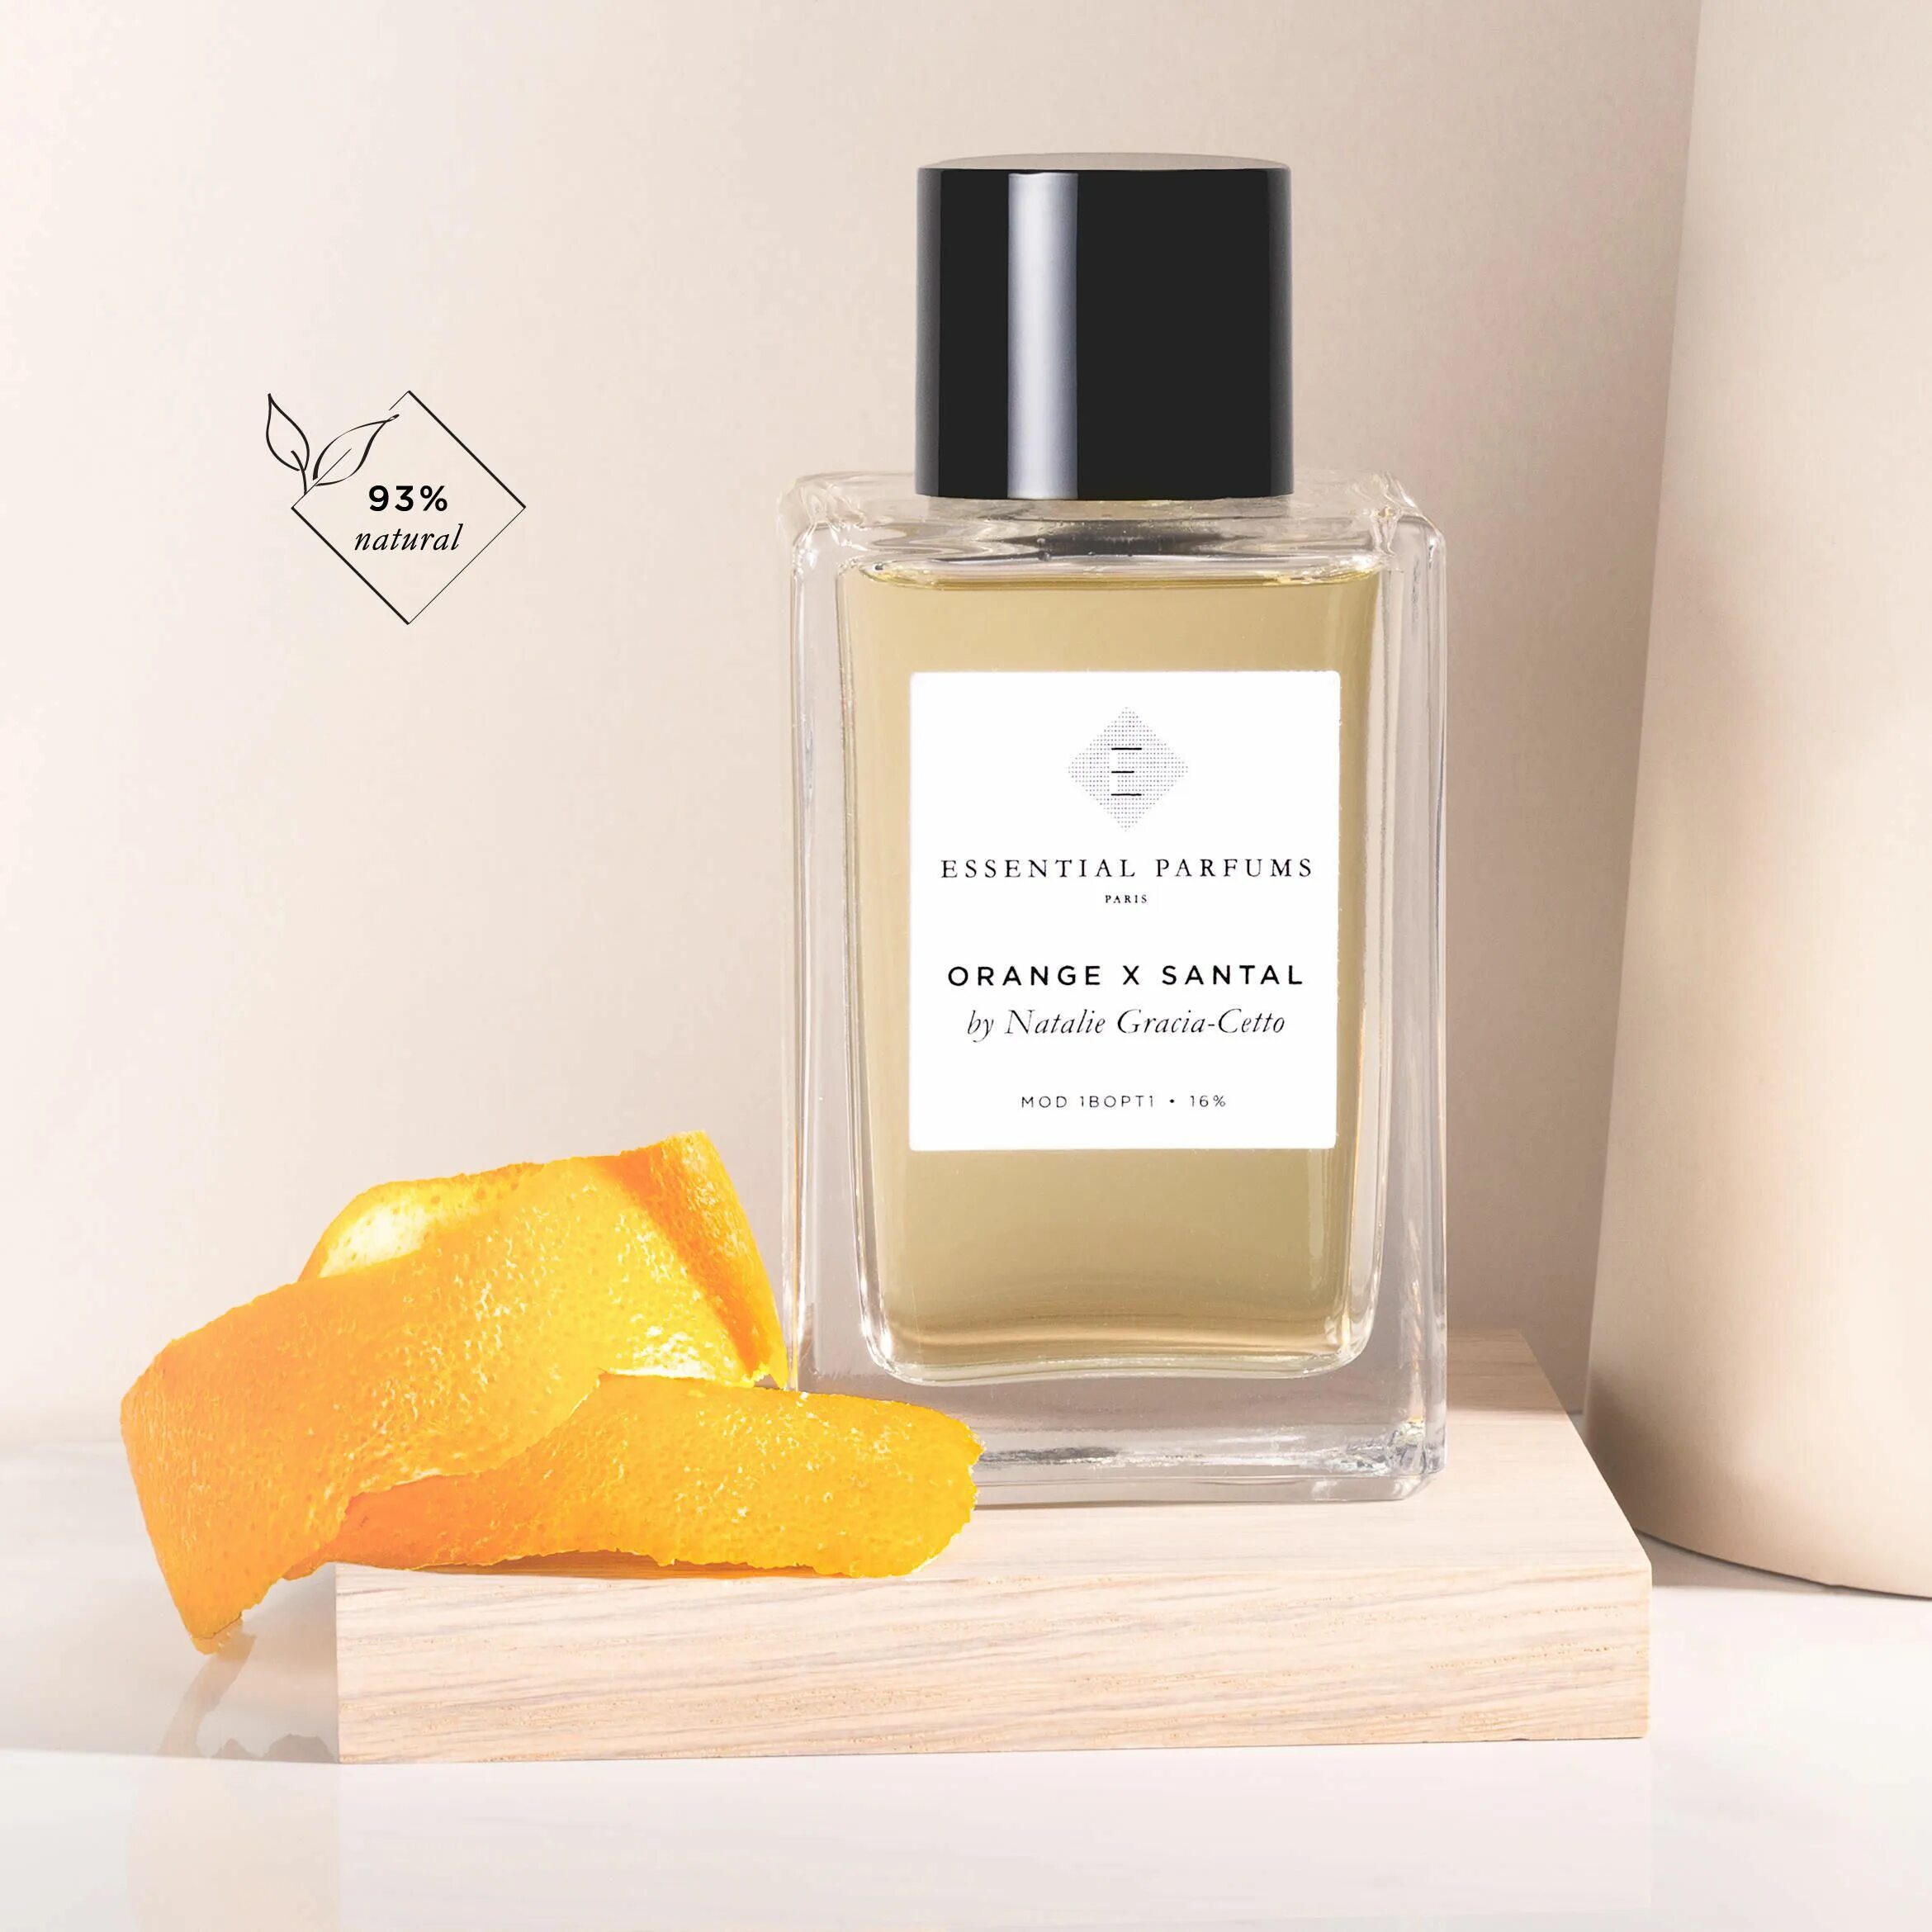 Essential Parfums Orange Santal. Essential Parfums Orange x Santal. Essential Parfums nice Bergamote. Essential Parfums Orange x Santal by Natalie Gracia-Cetto. Эссенциале парфюм бойс